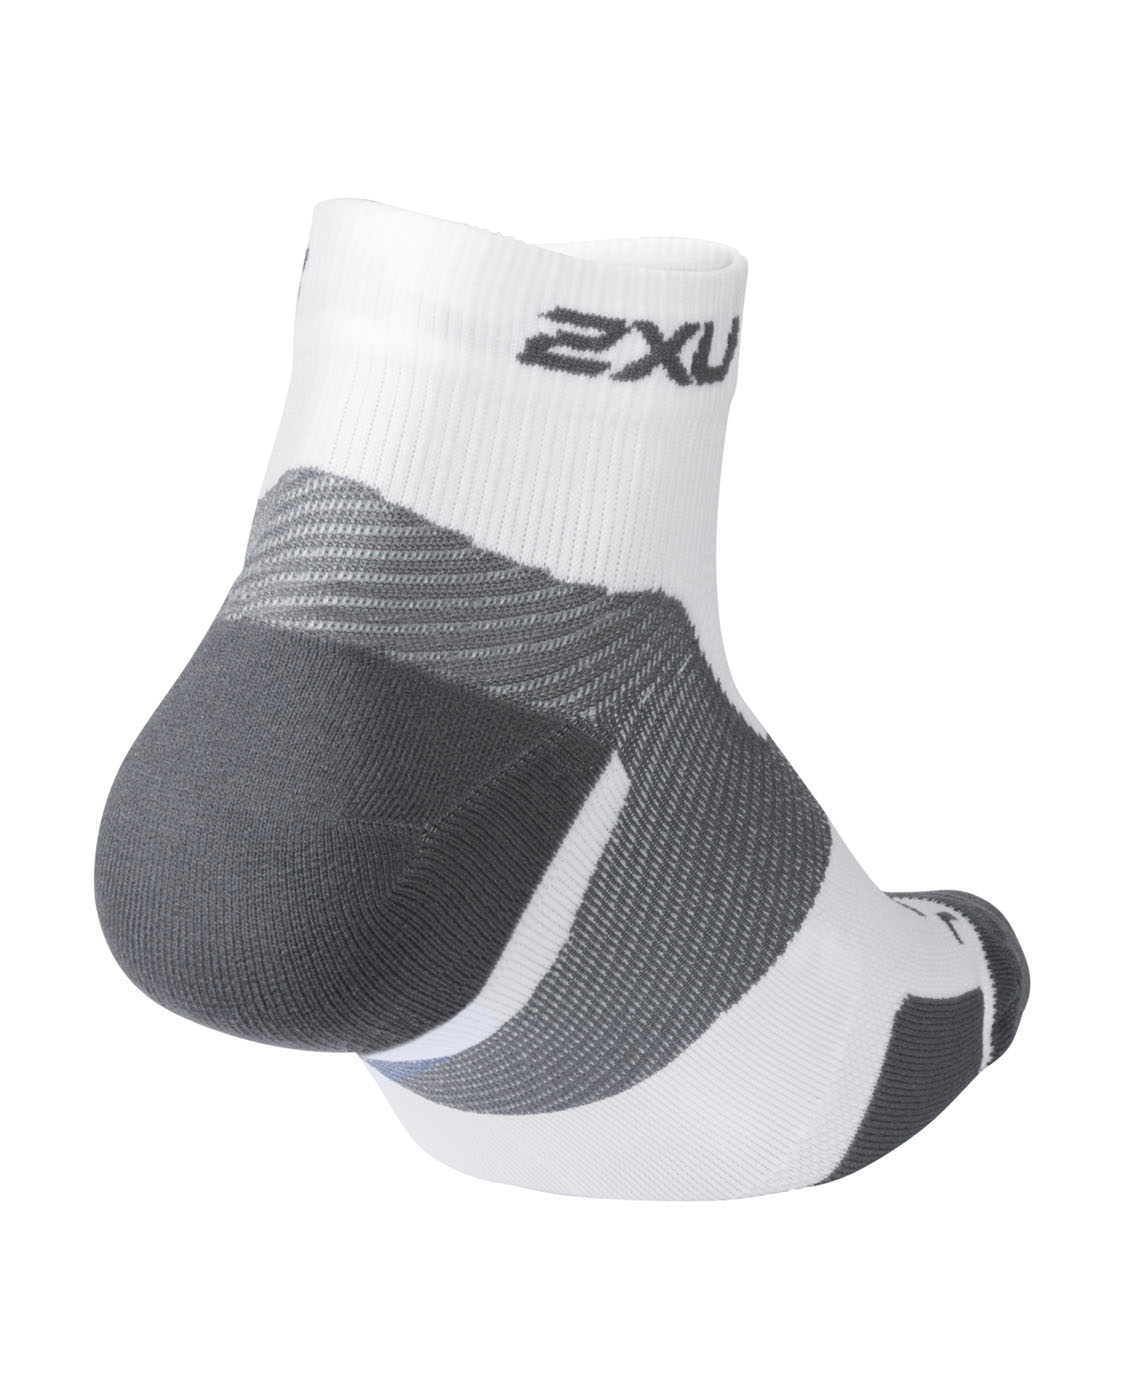 2XU Unisex Vectr Light Cush 1/4 Crew Sock - White/Grey